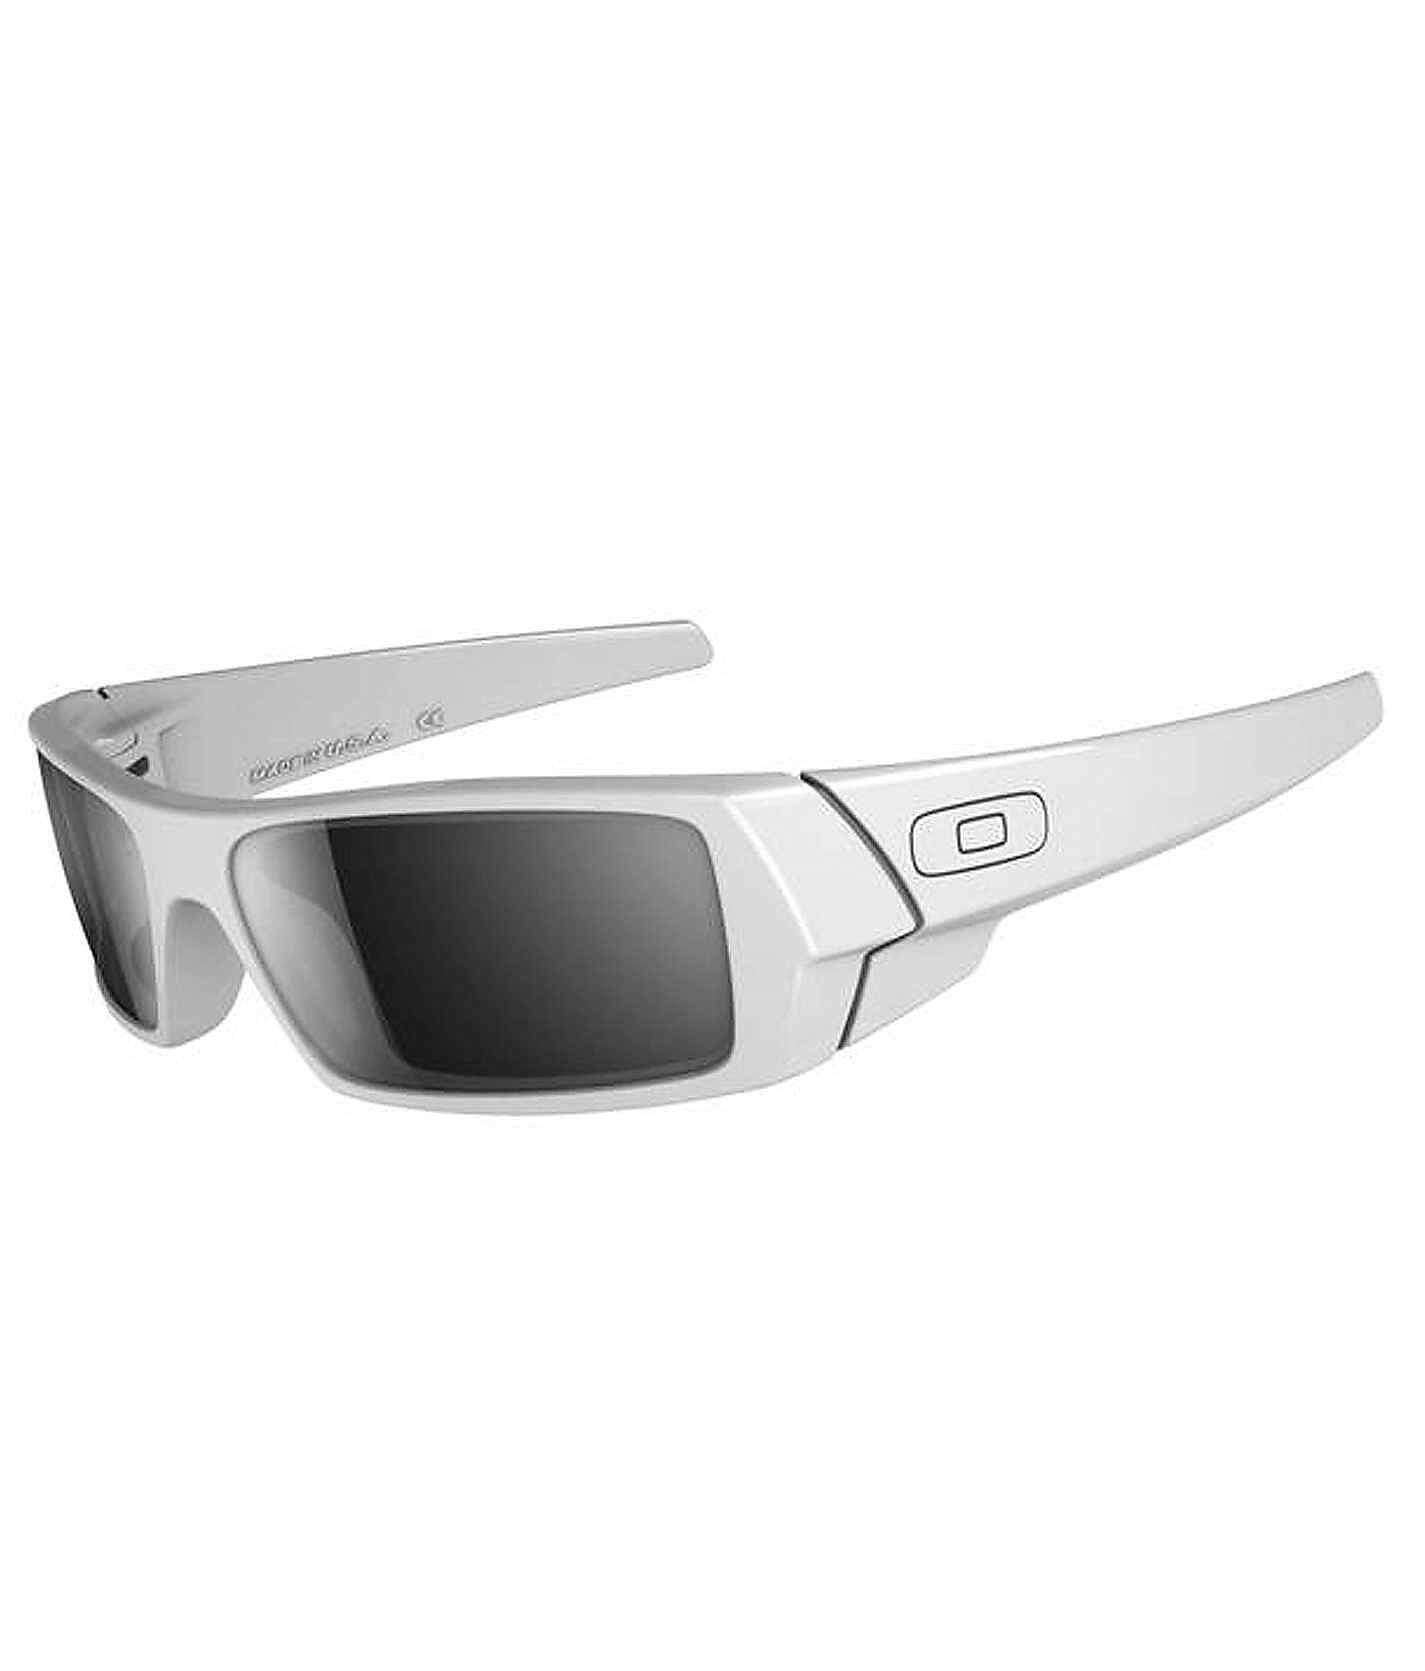 Oakley Gascan Sunglasses - Men's Sunglasses Glasses in White Buckle